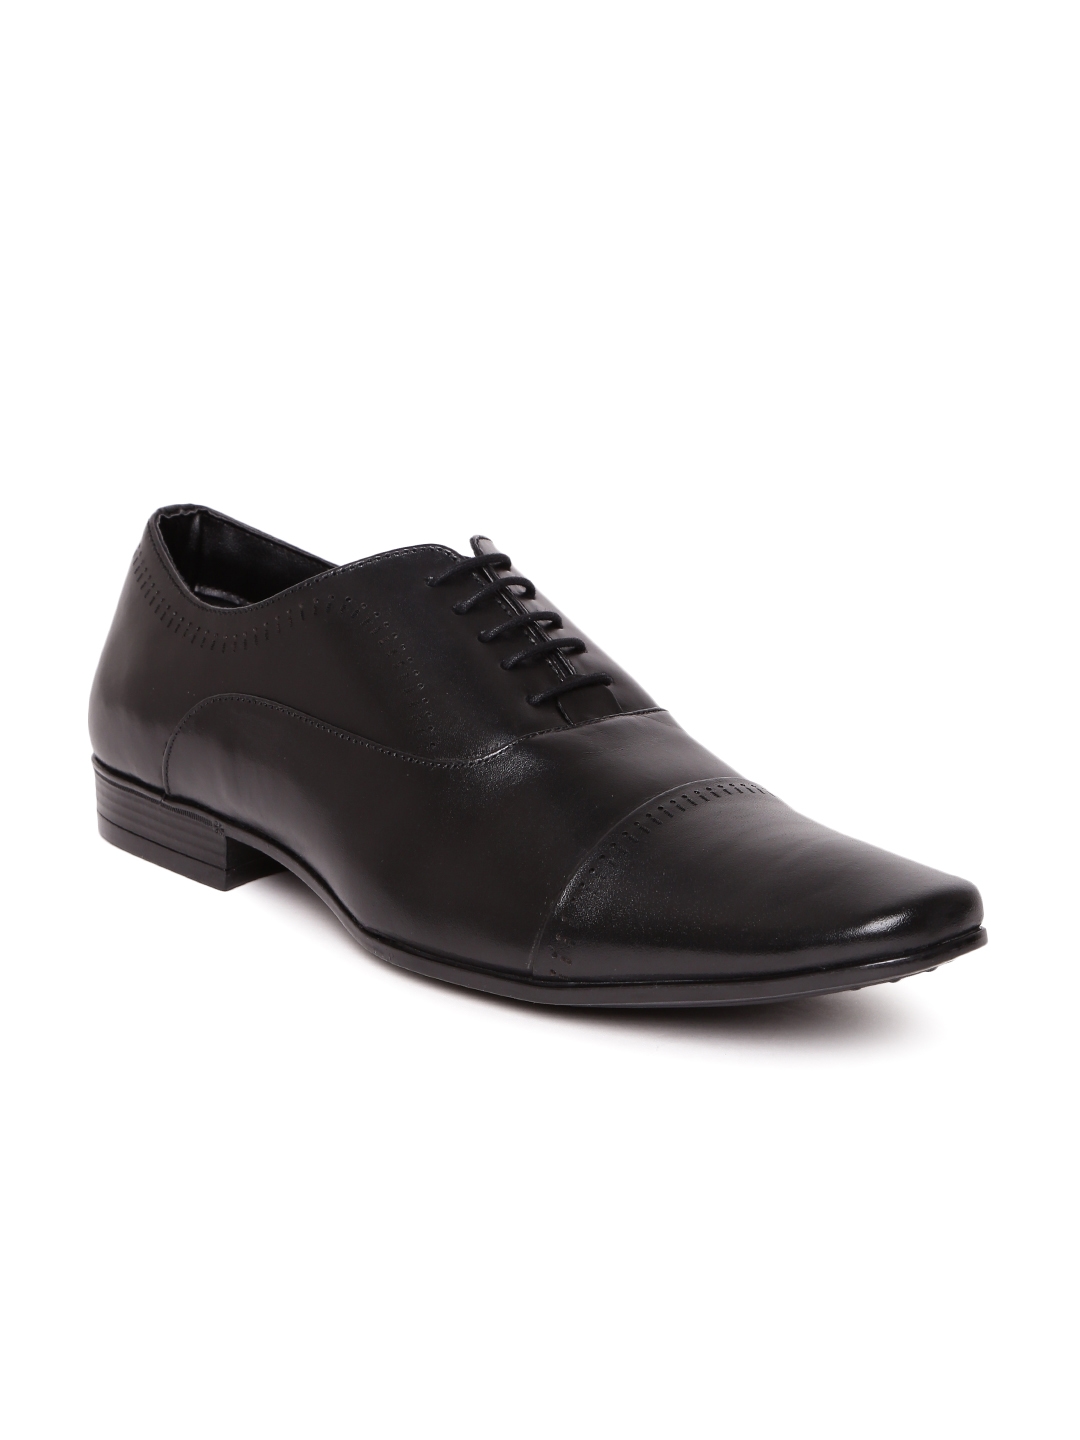 Stylish Formal Shoes - Best Elegant Classy Formal Shoes For Men